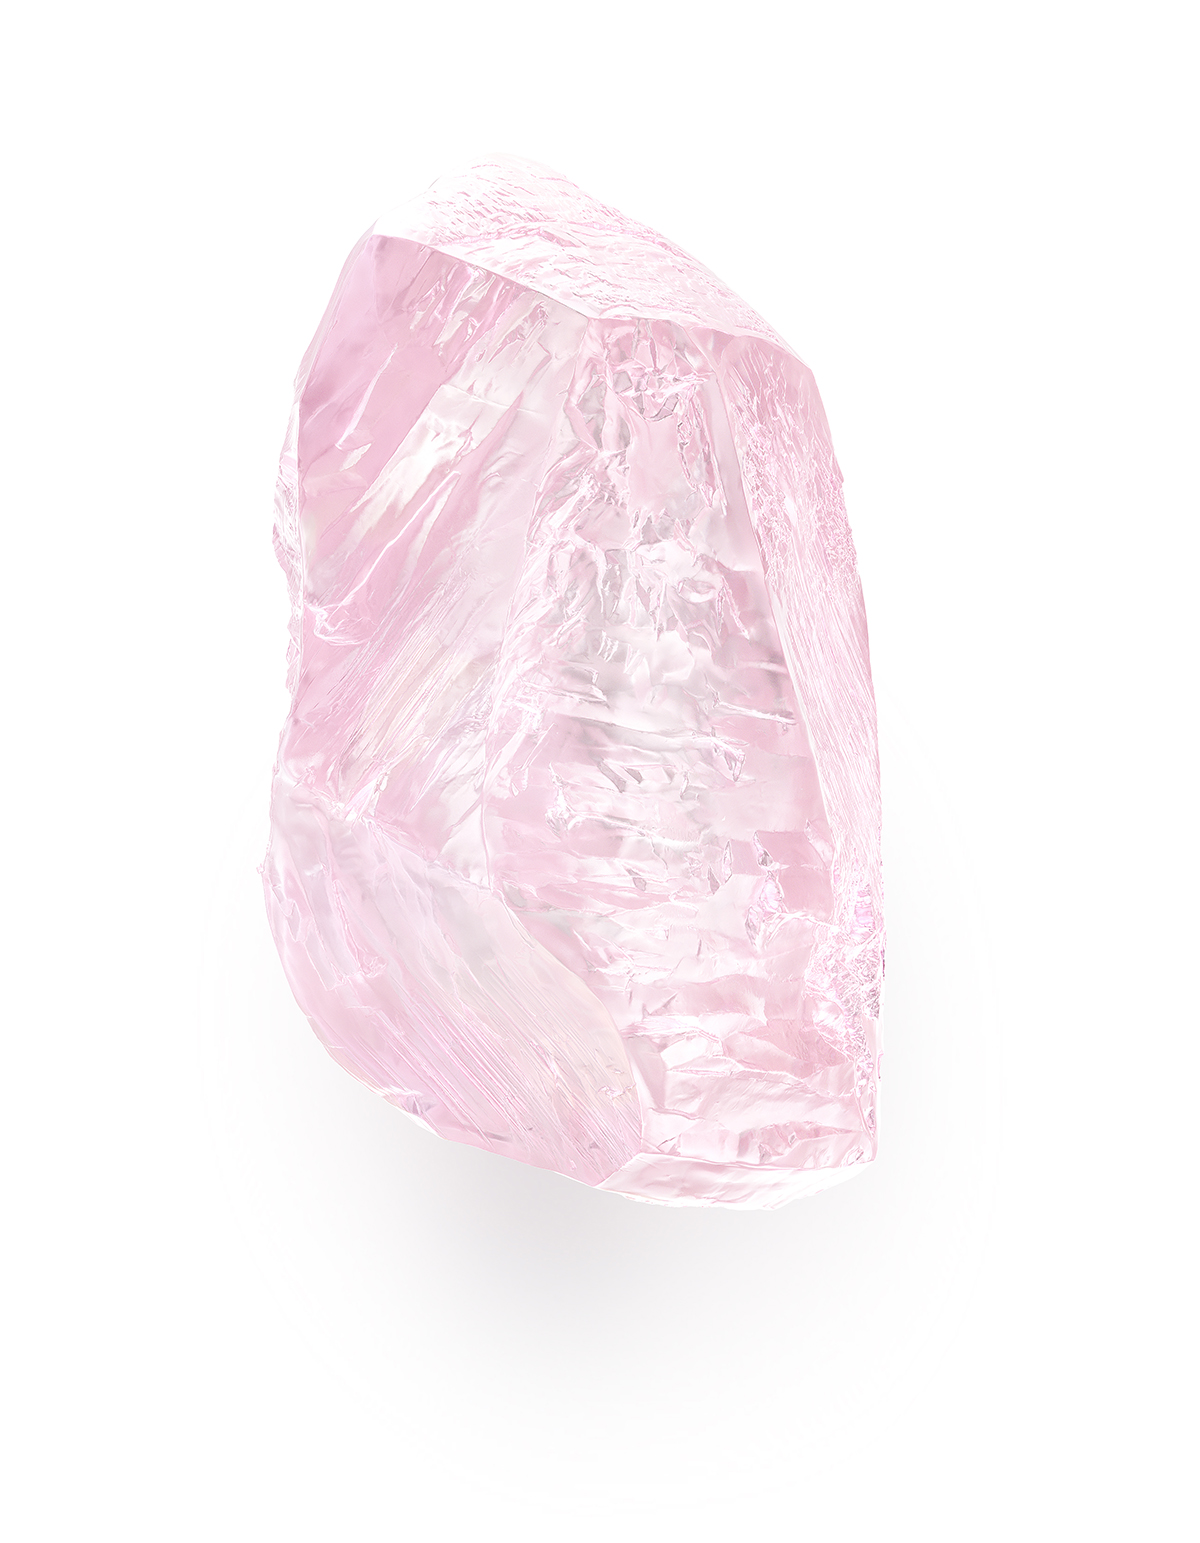 rough pink diamond